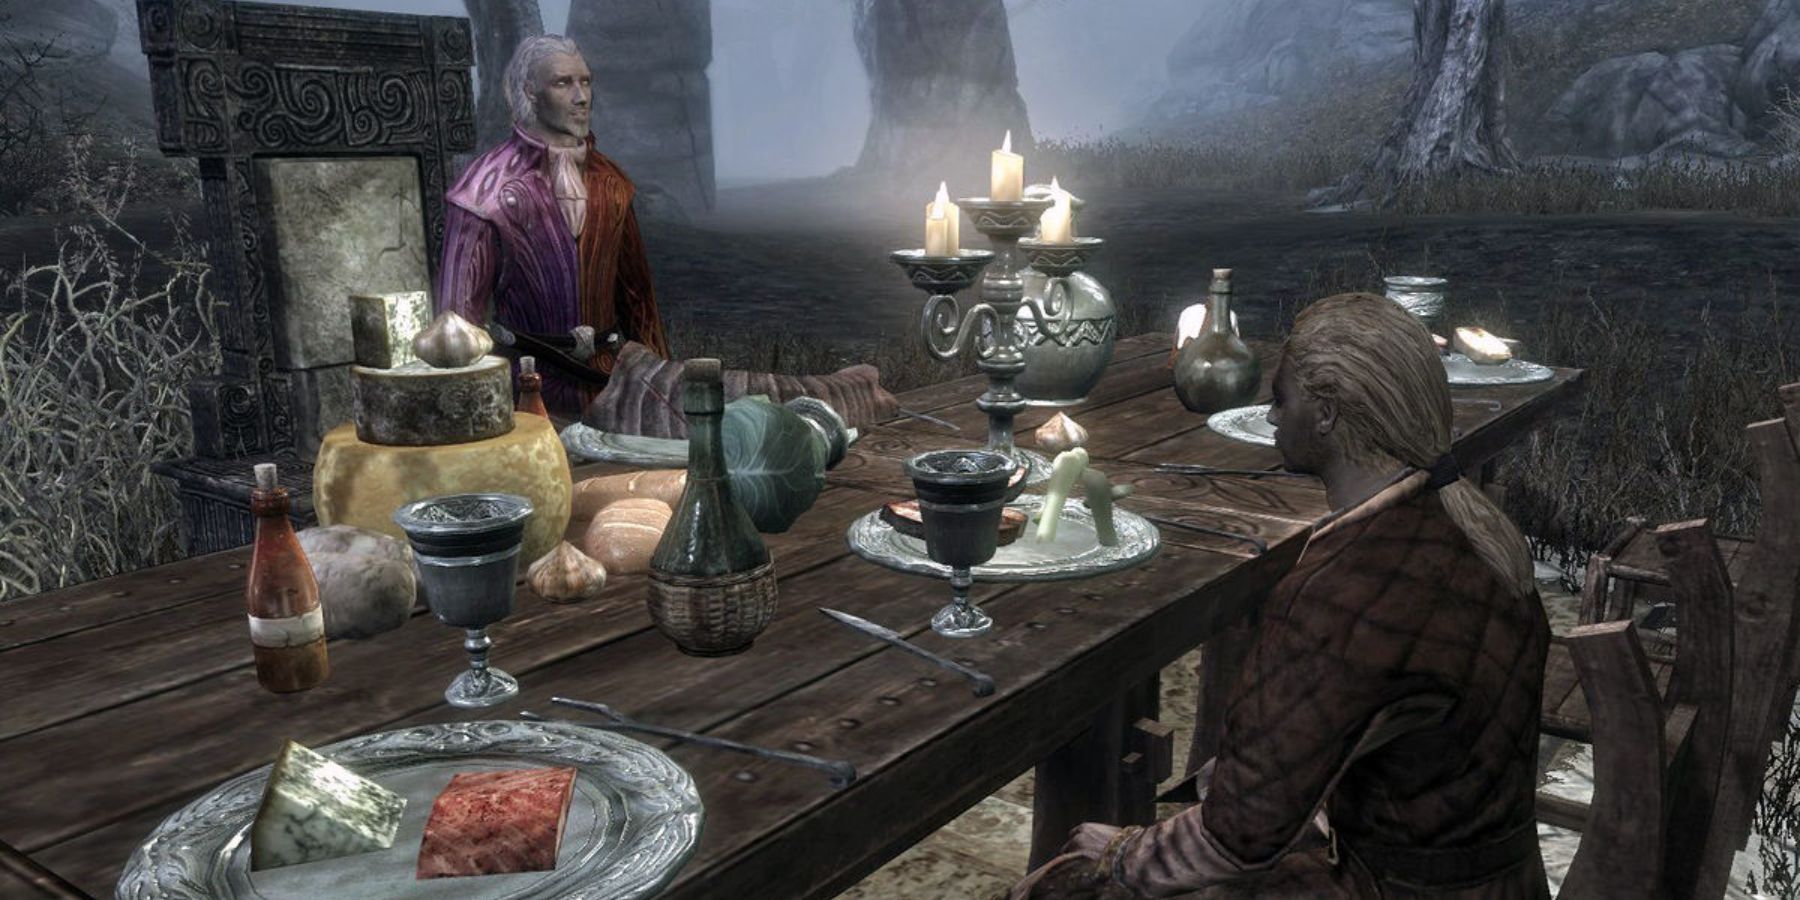 Sheogorath hosting a banquet in Pelgius' mind